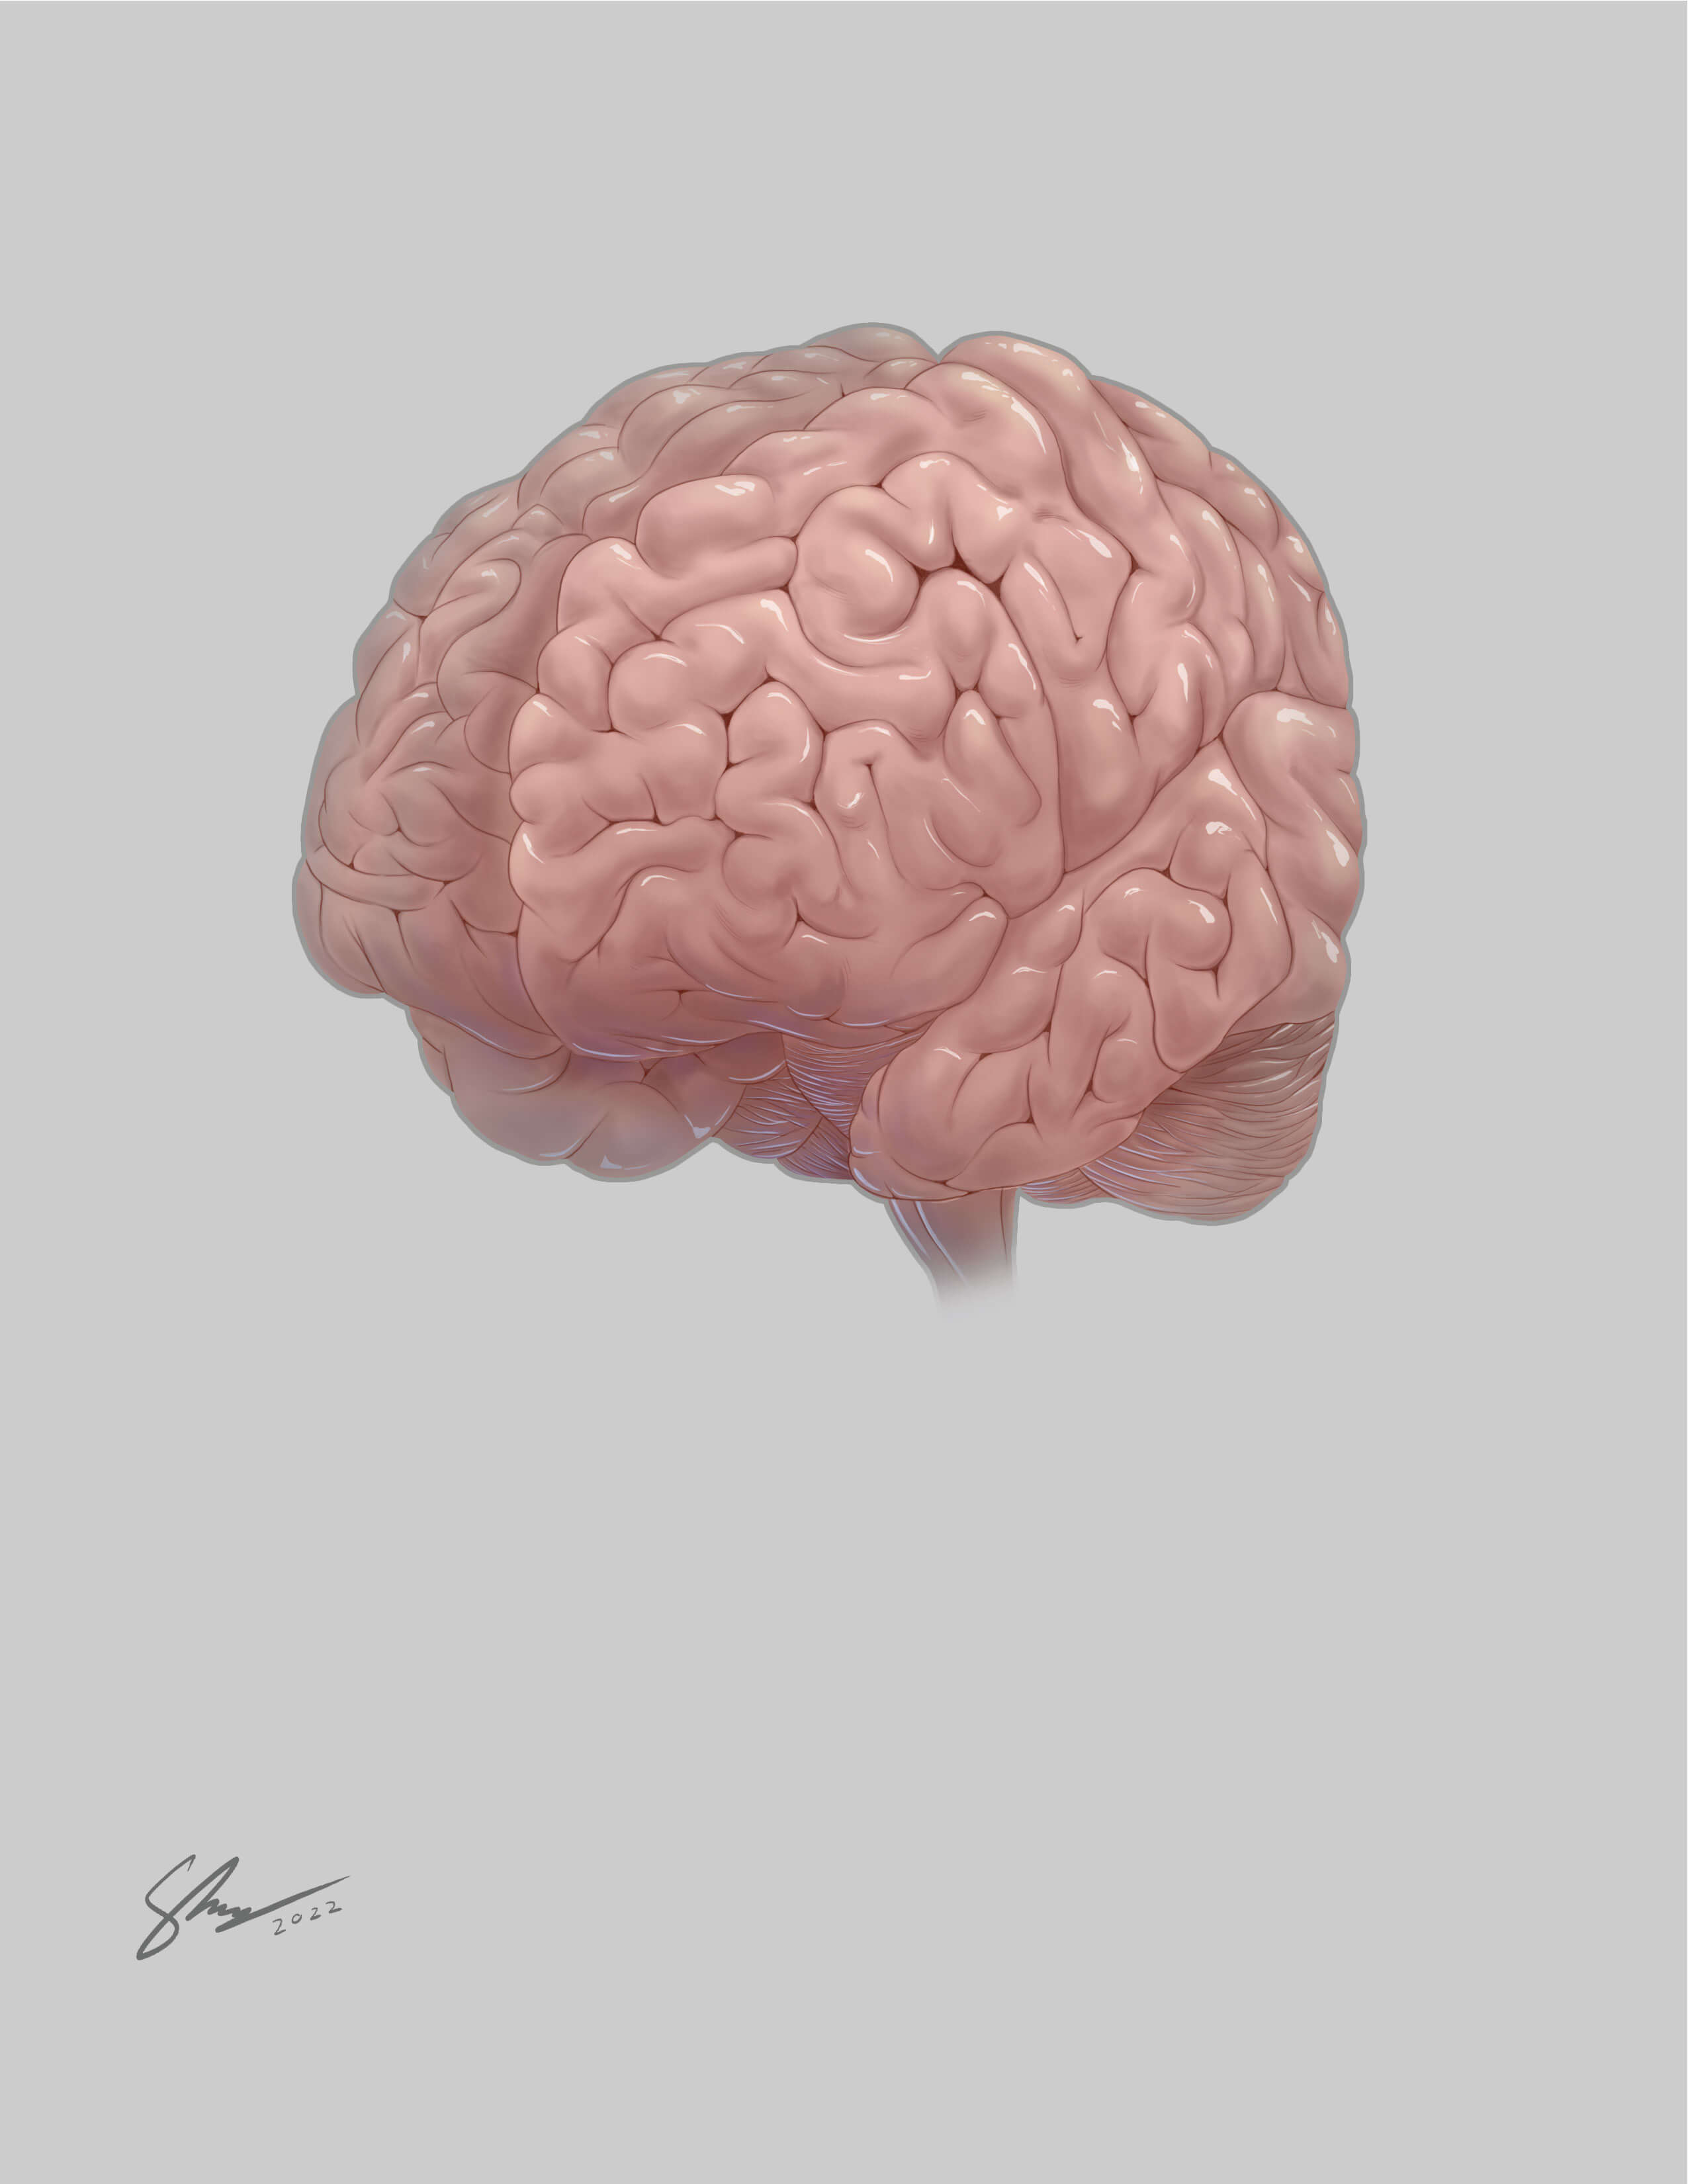 Final illustration of solo brain